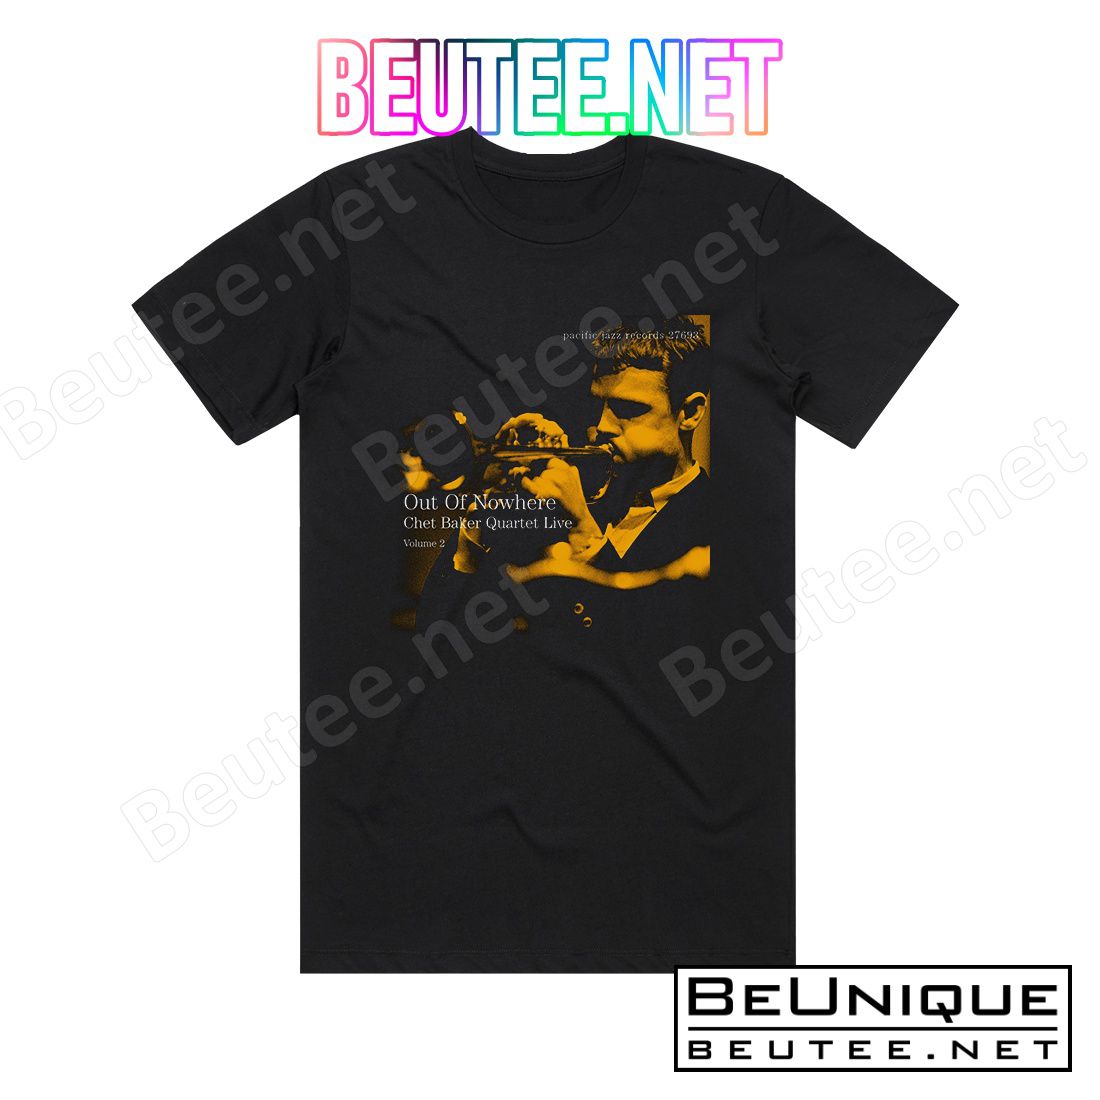 Chet Baker Quartet Live Out Of Nowhere Volume 2 Album Cover T-Shirt